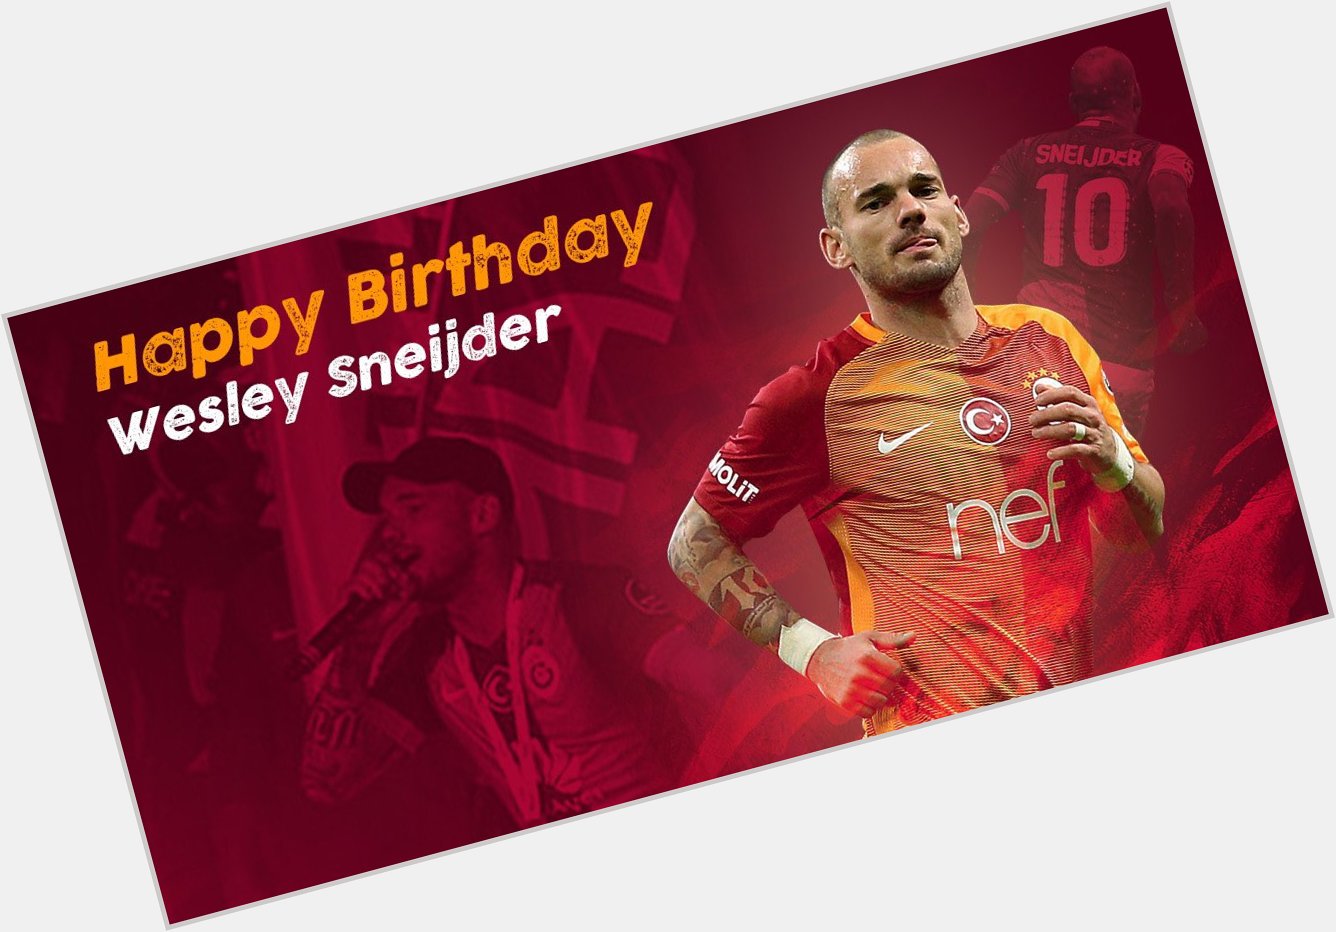 Son Fener Bükücü...
Happy Birthday Wesley Sneijder 